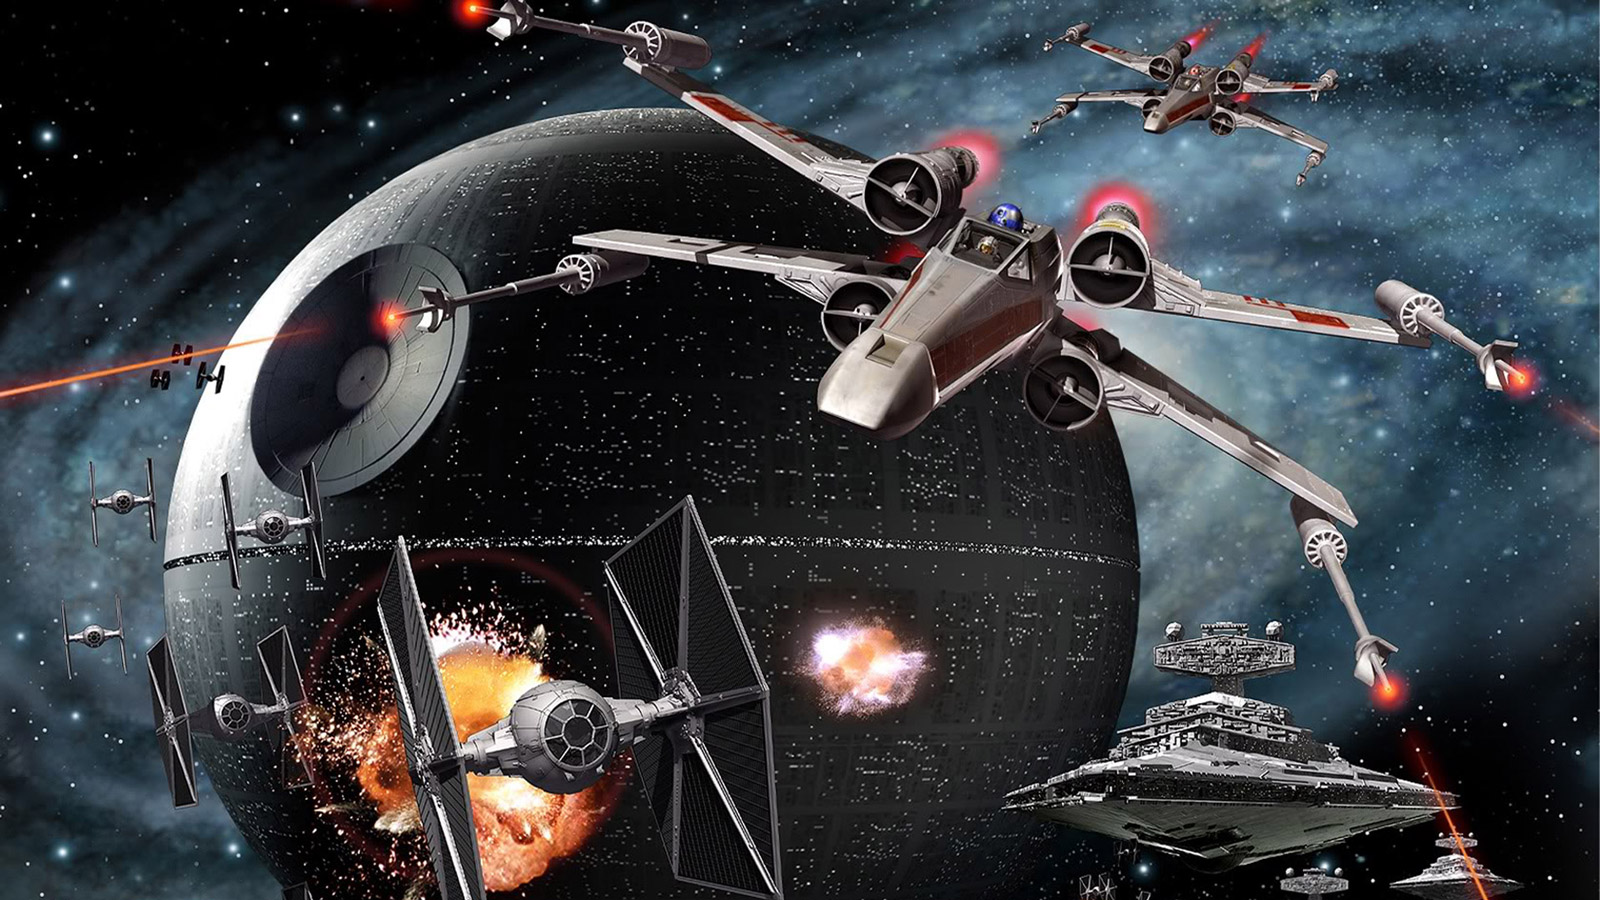 Star Wars Empire At War Wallpaper In